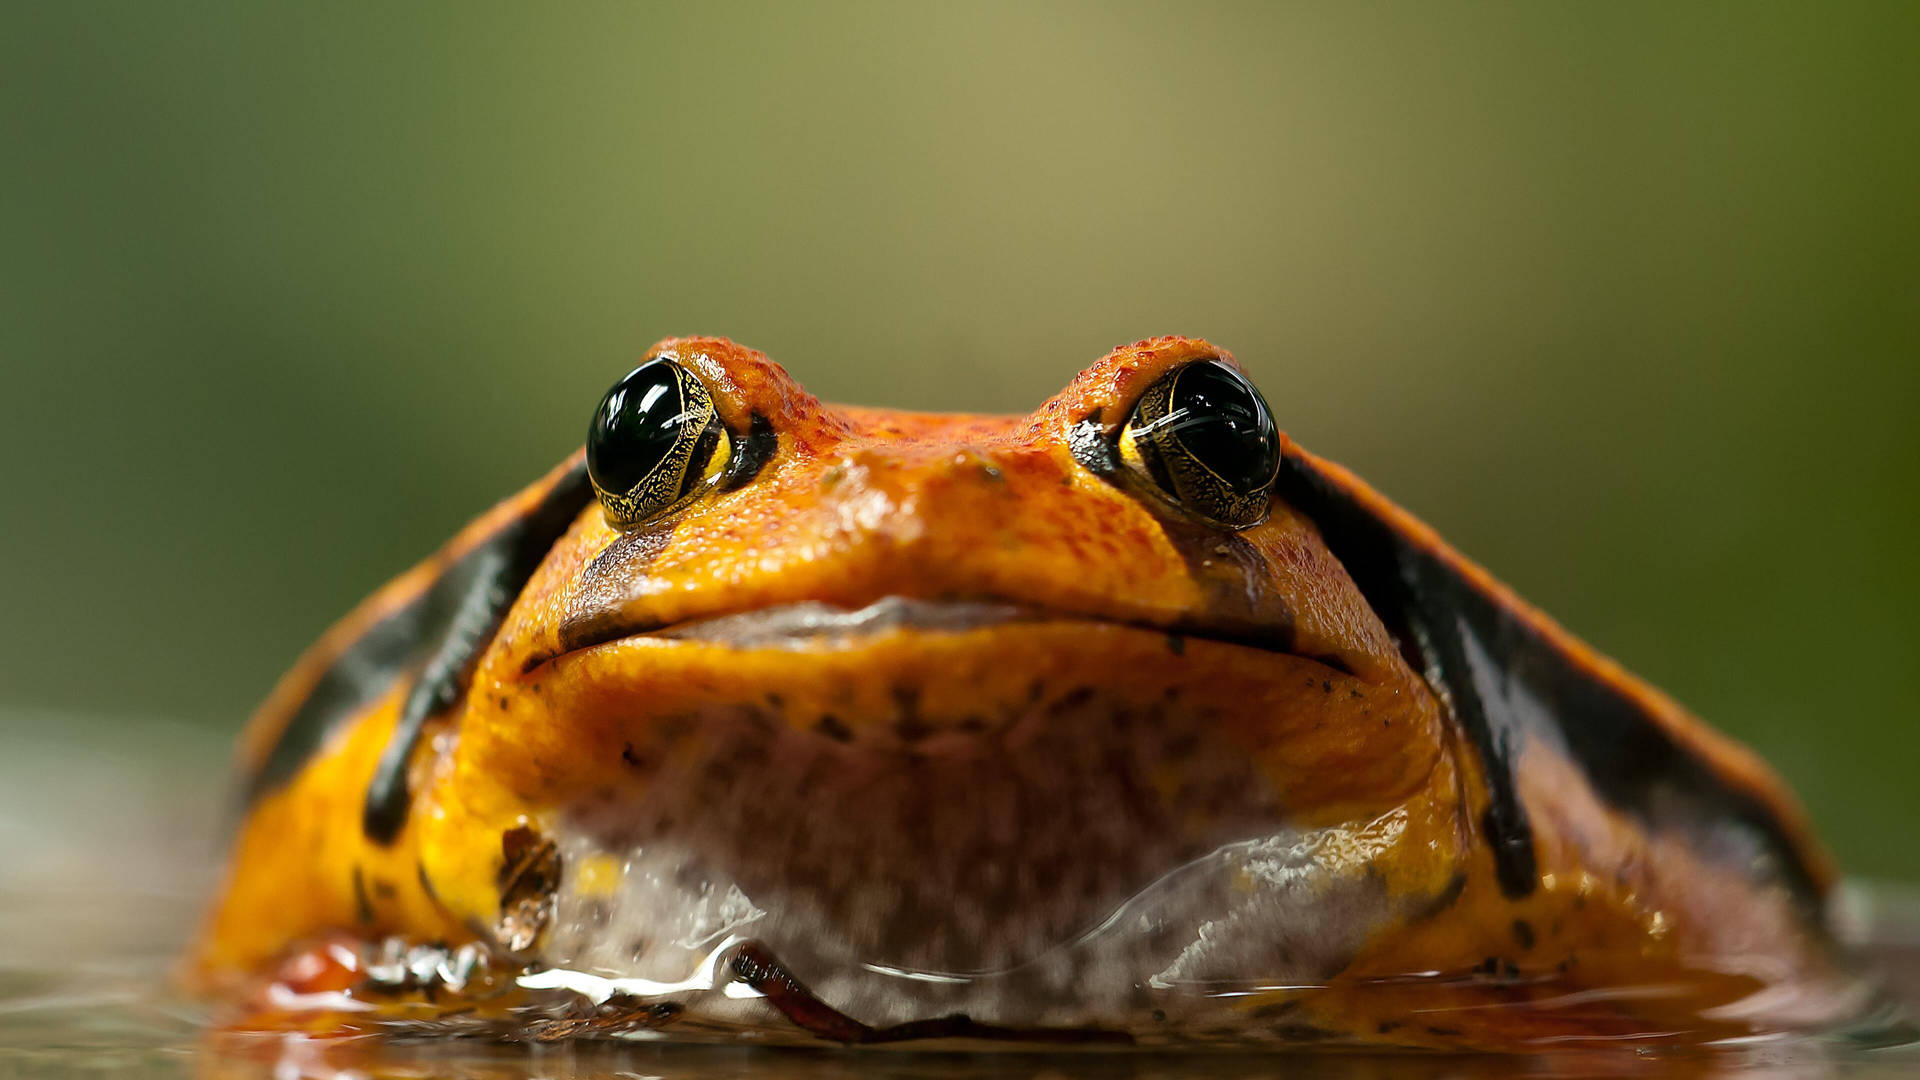 Kawaii Frog With Big Eyes Wallpaper